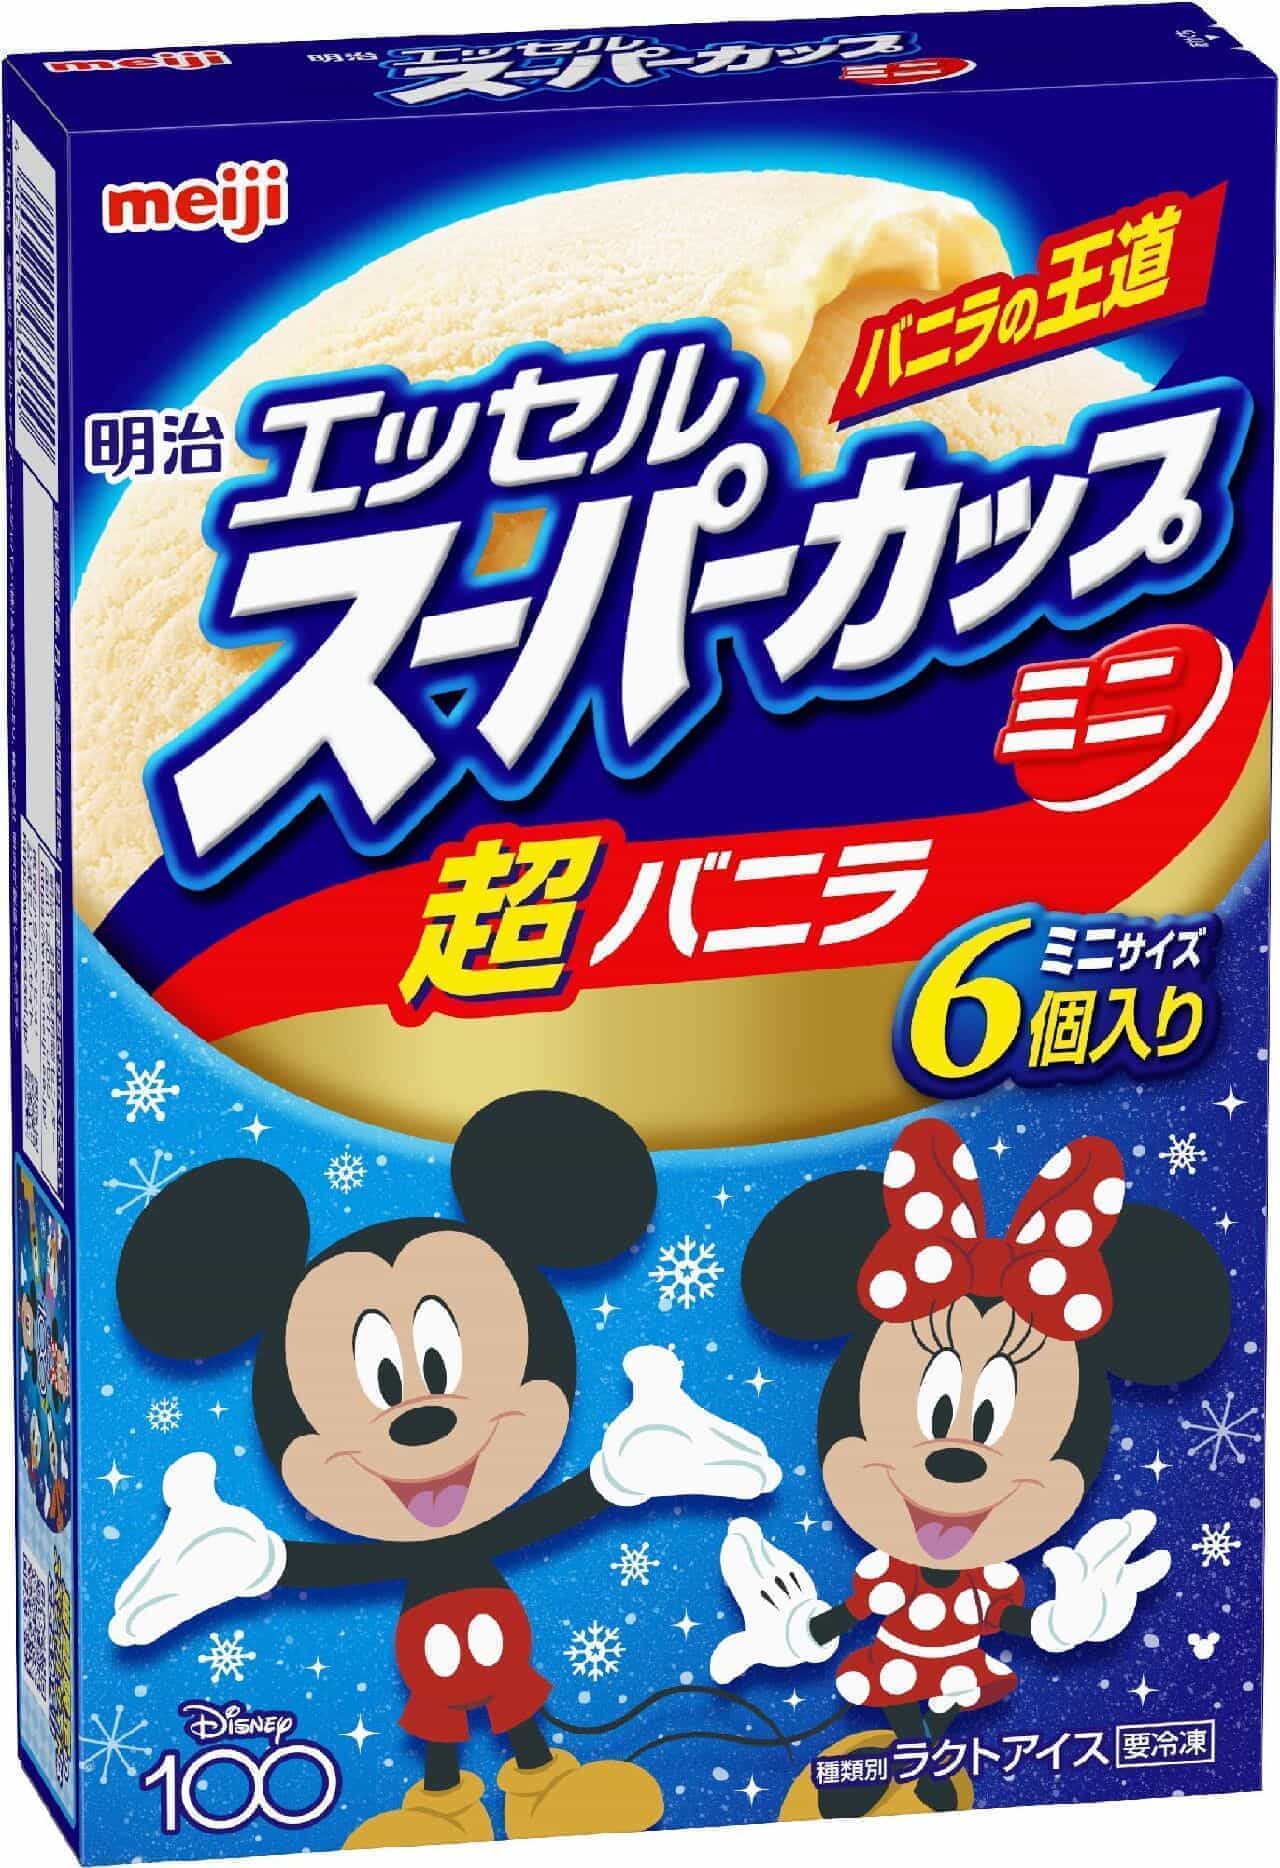 Meiji Essle Super Cup Mini Super Vanilla" in "Disney 100" limited edition package.